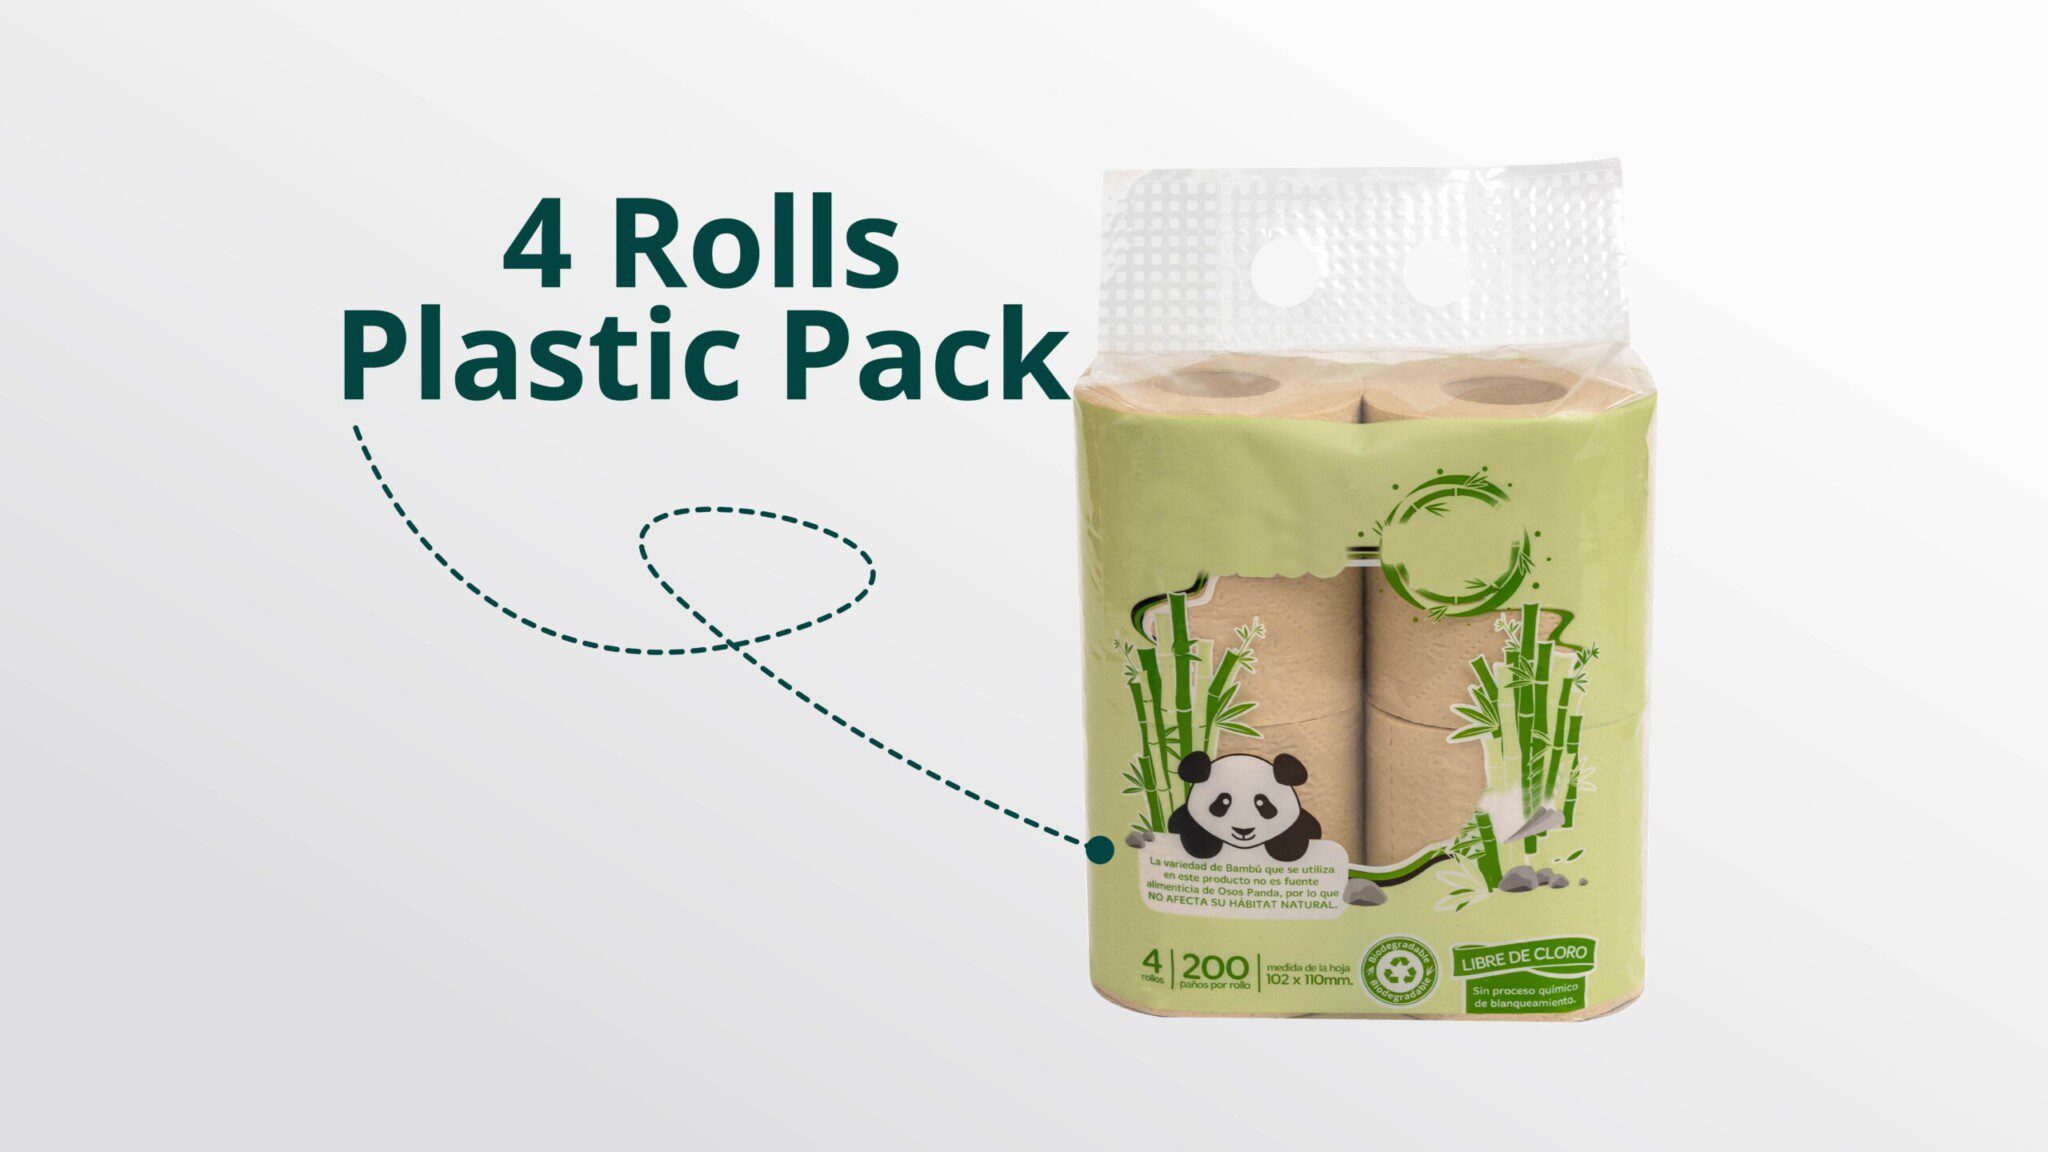 4 rolls plastic pack toilet paper